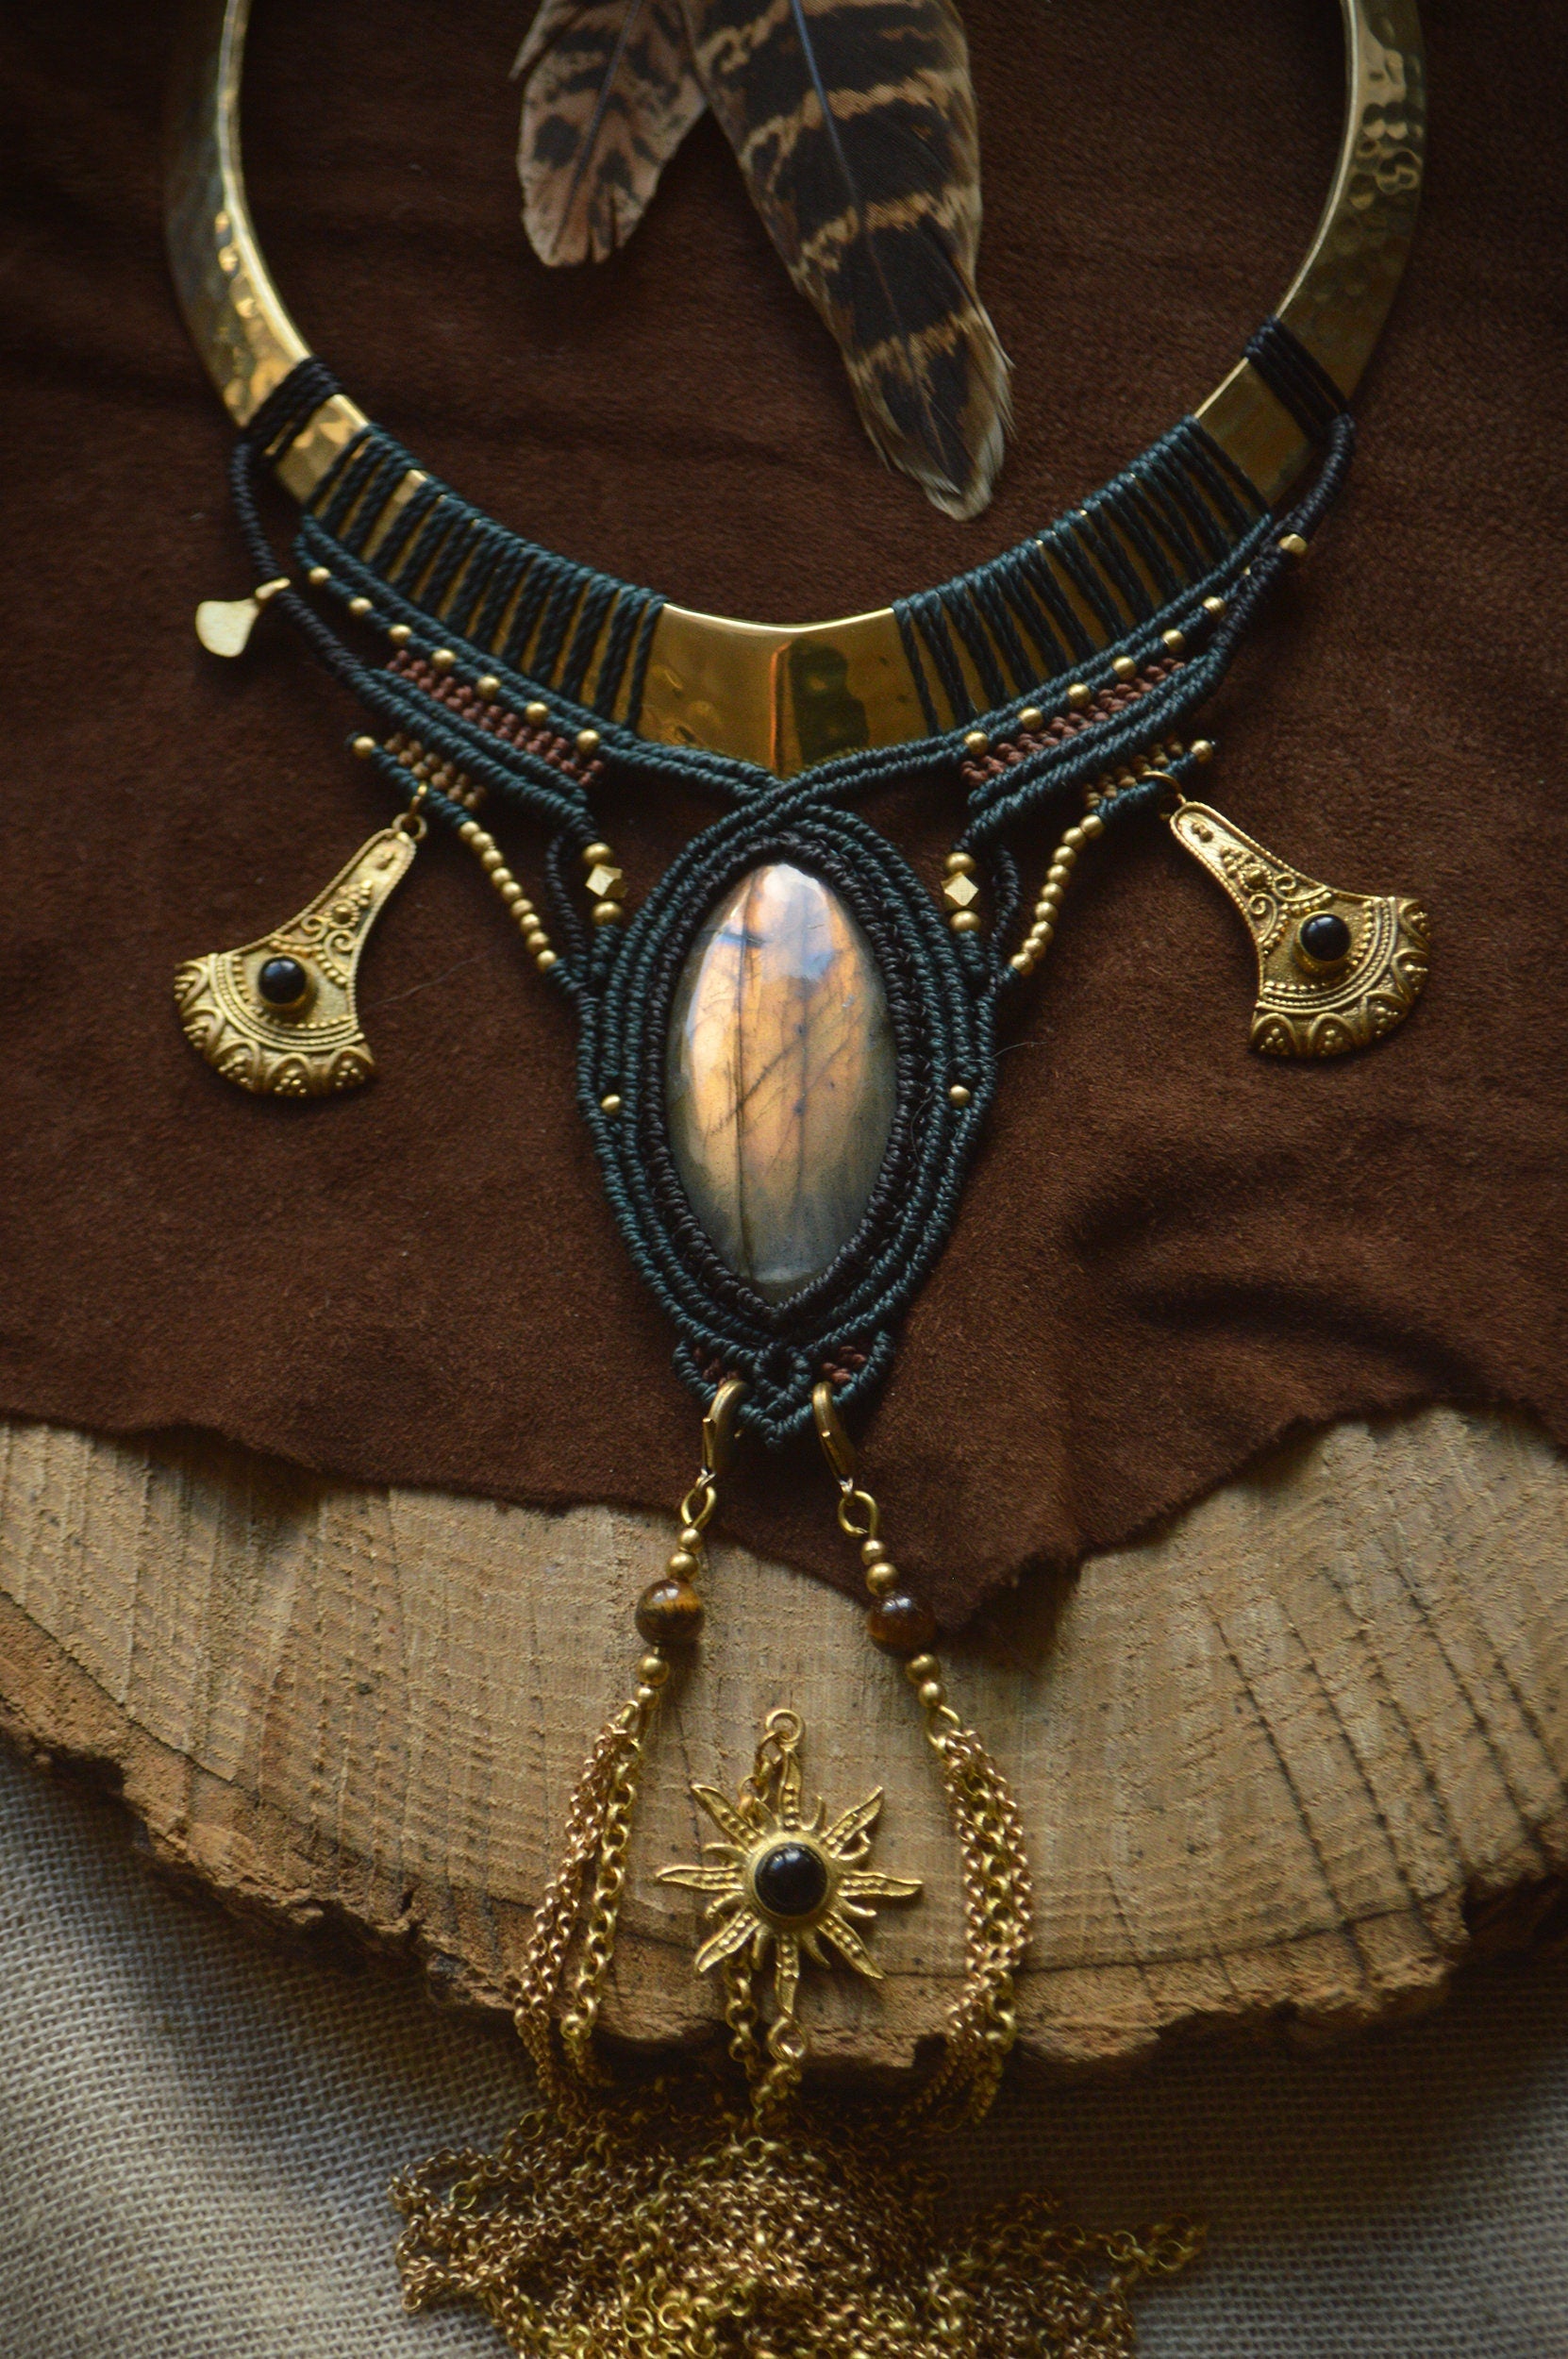 Tribal goddess statement collar necklace with labradorite and black onyx. Boho, tribal, body jewellery